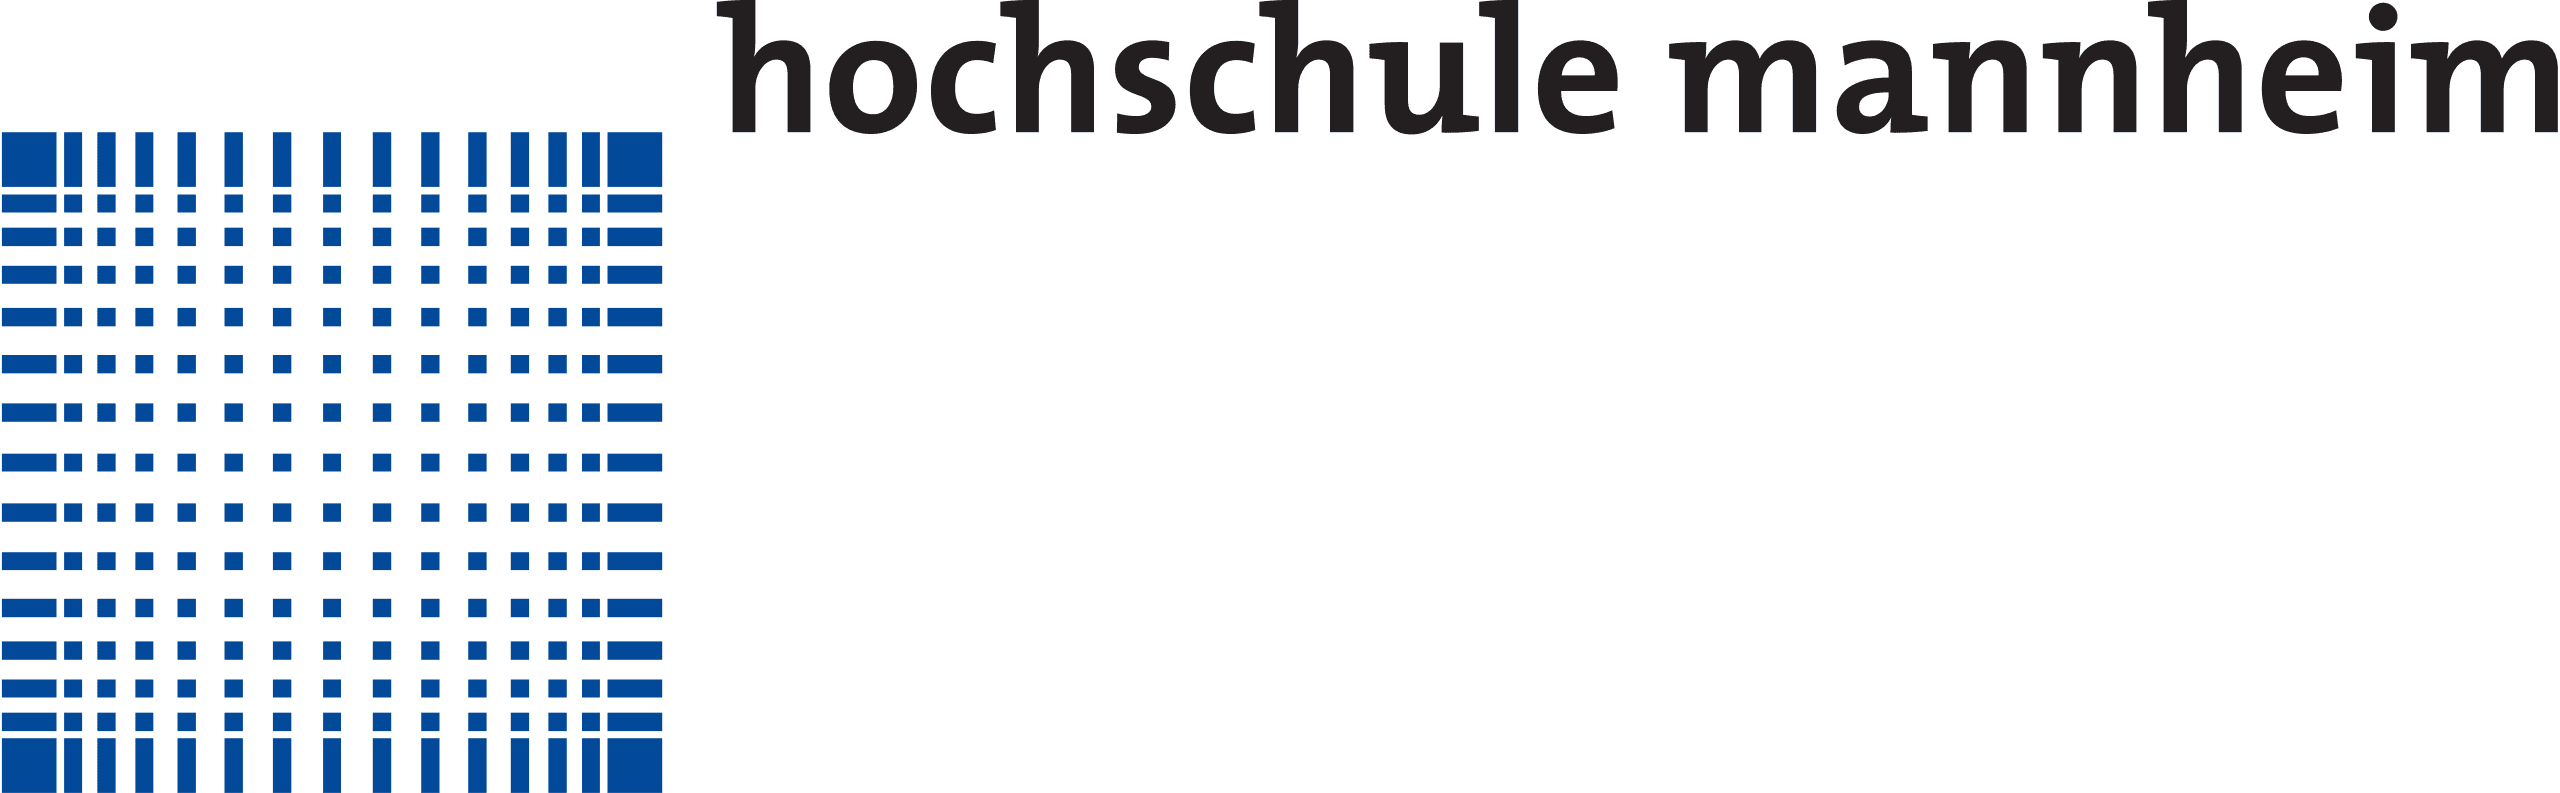 hochschule-mannheim-university-of-applied-sciences-e76b4f3e6d-cover-picture